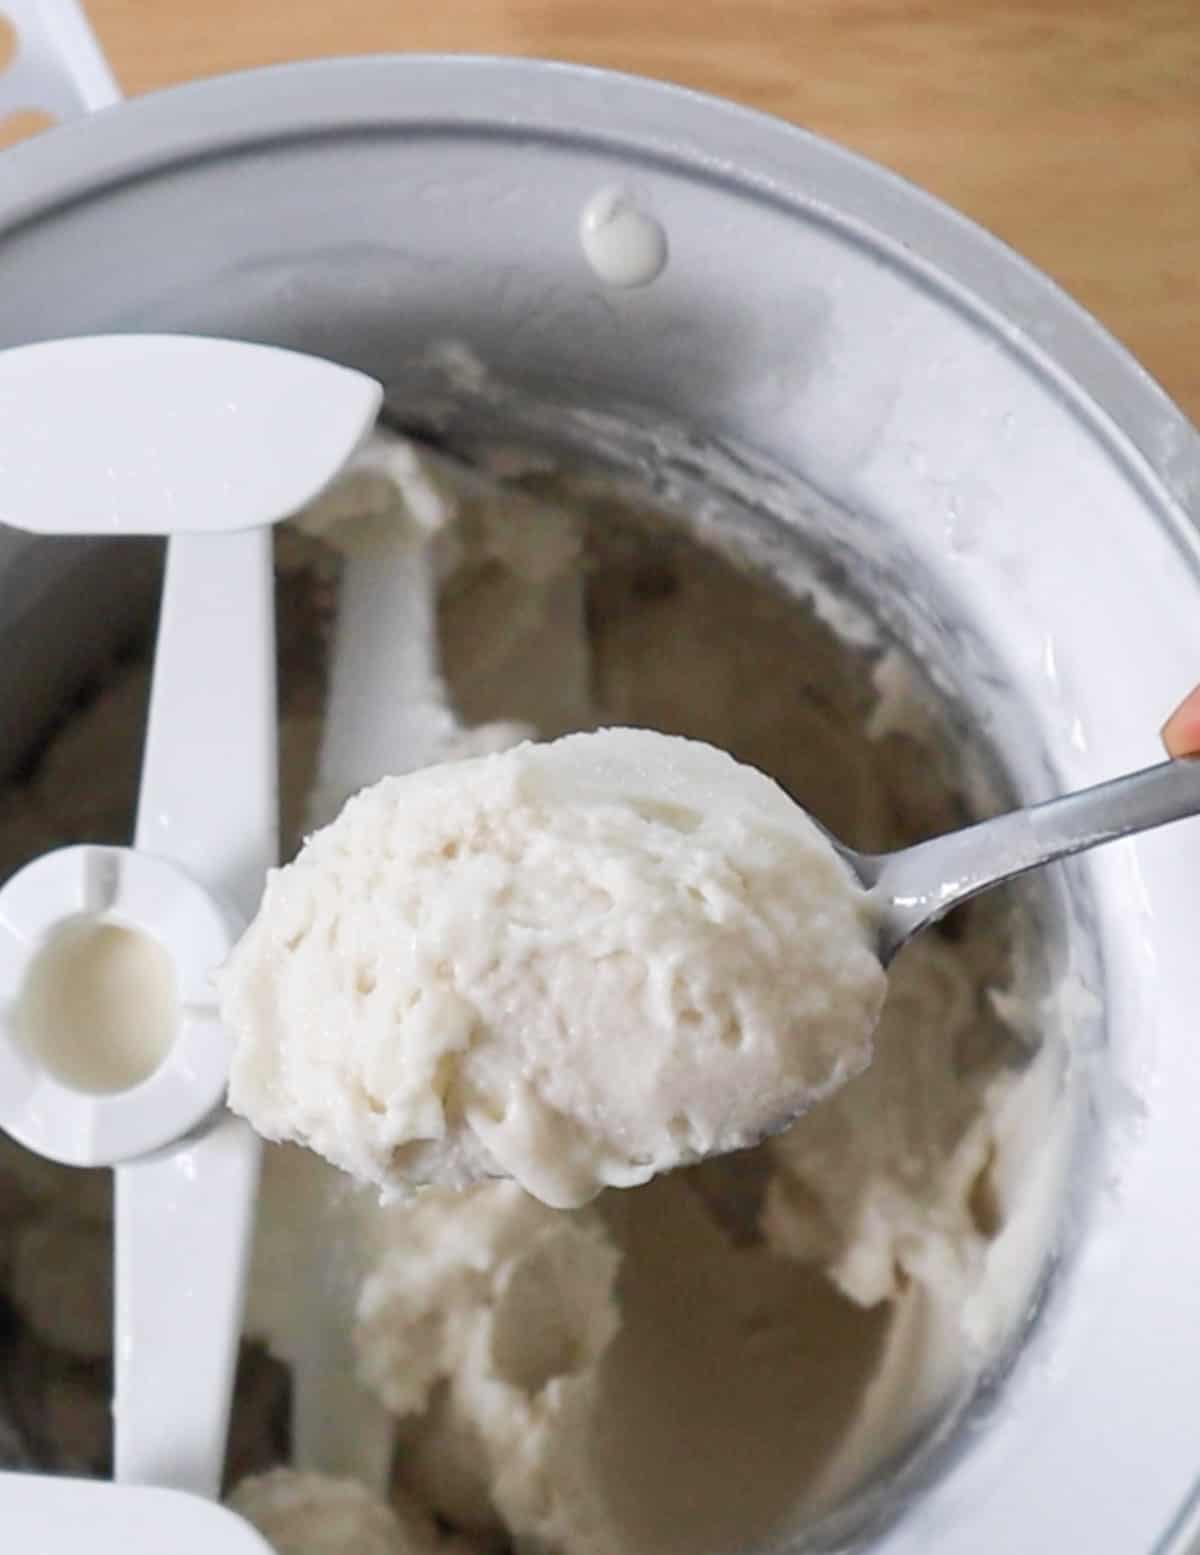 scopping freshly churned ice cream.